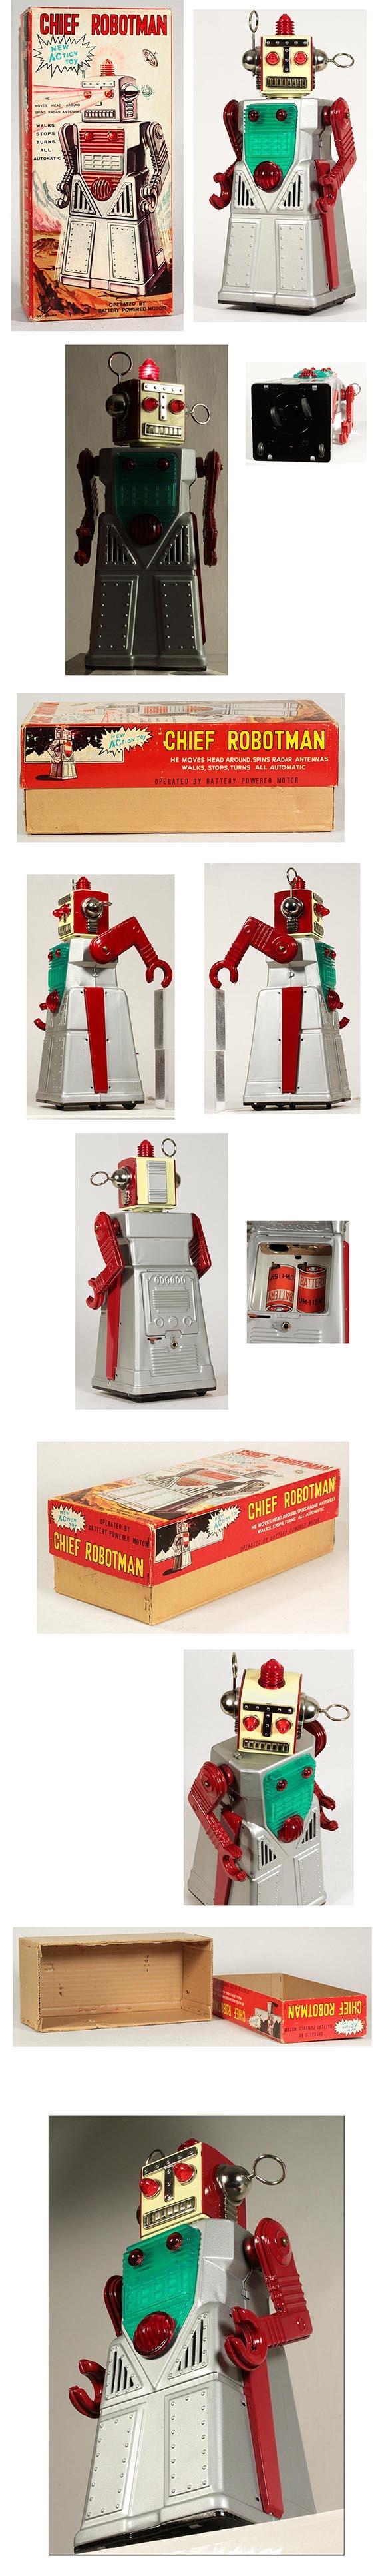 1962 Yoshiya, Chief Robotman in Original Box